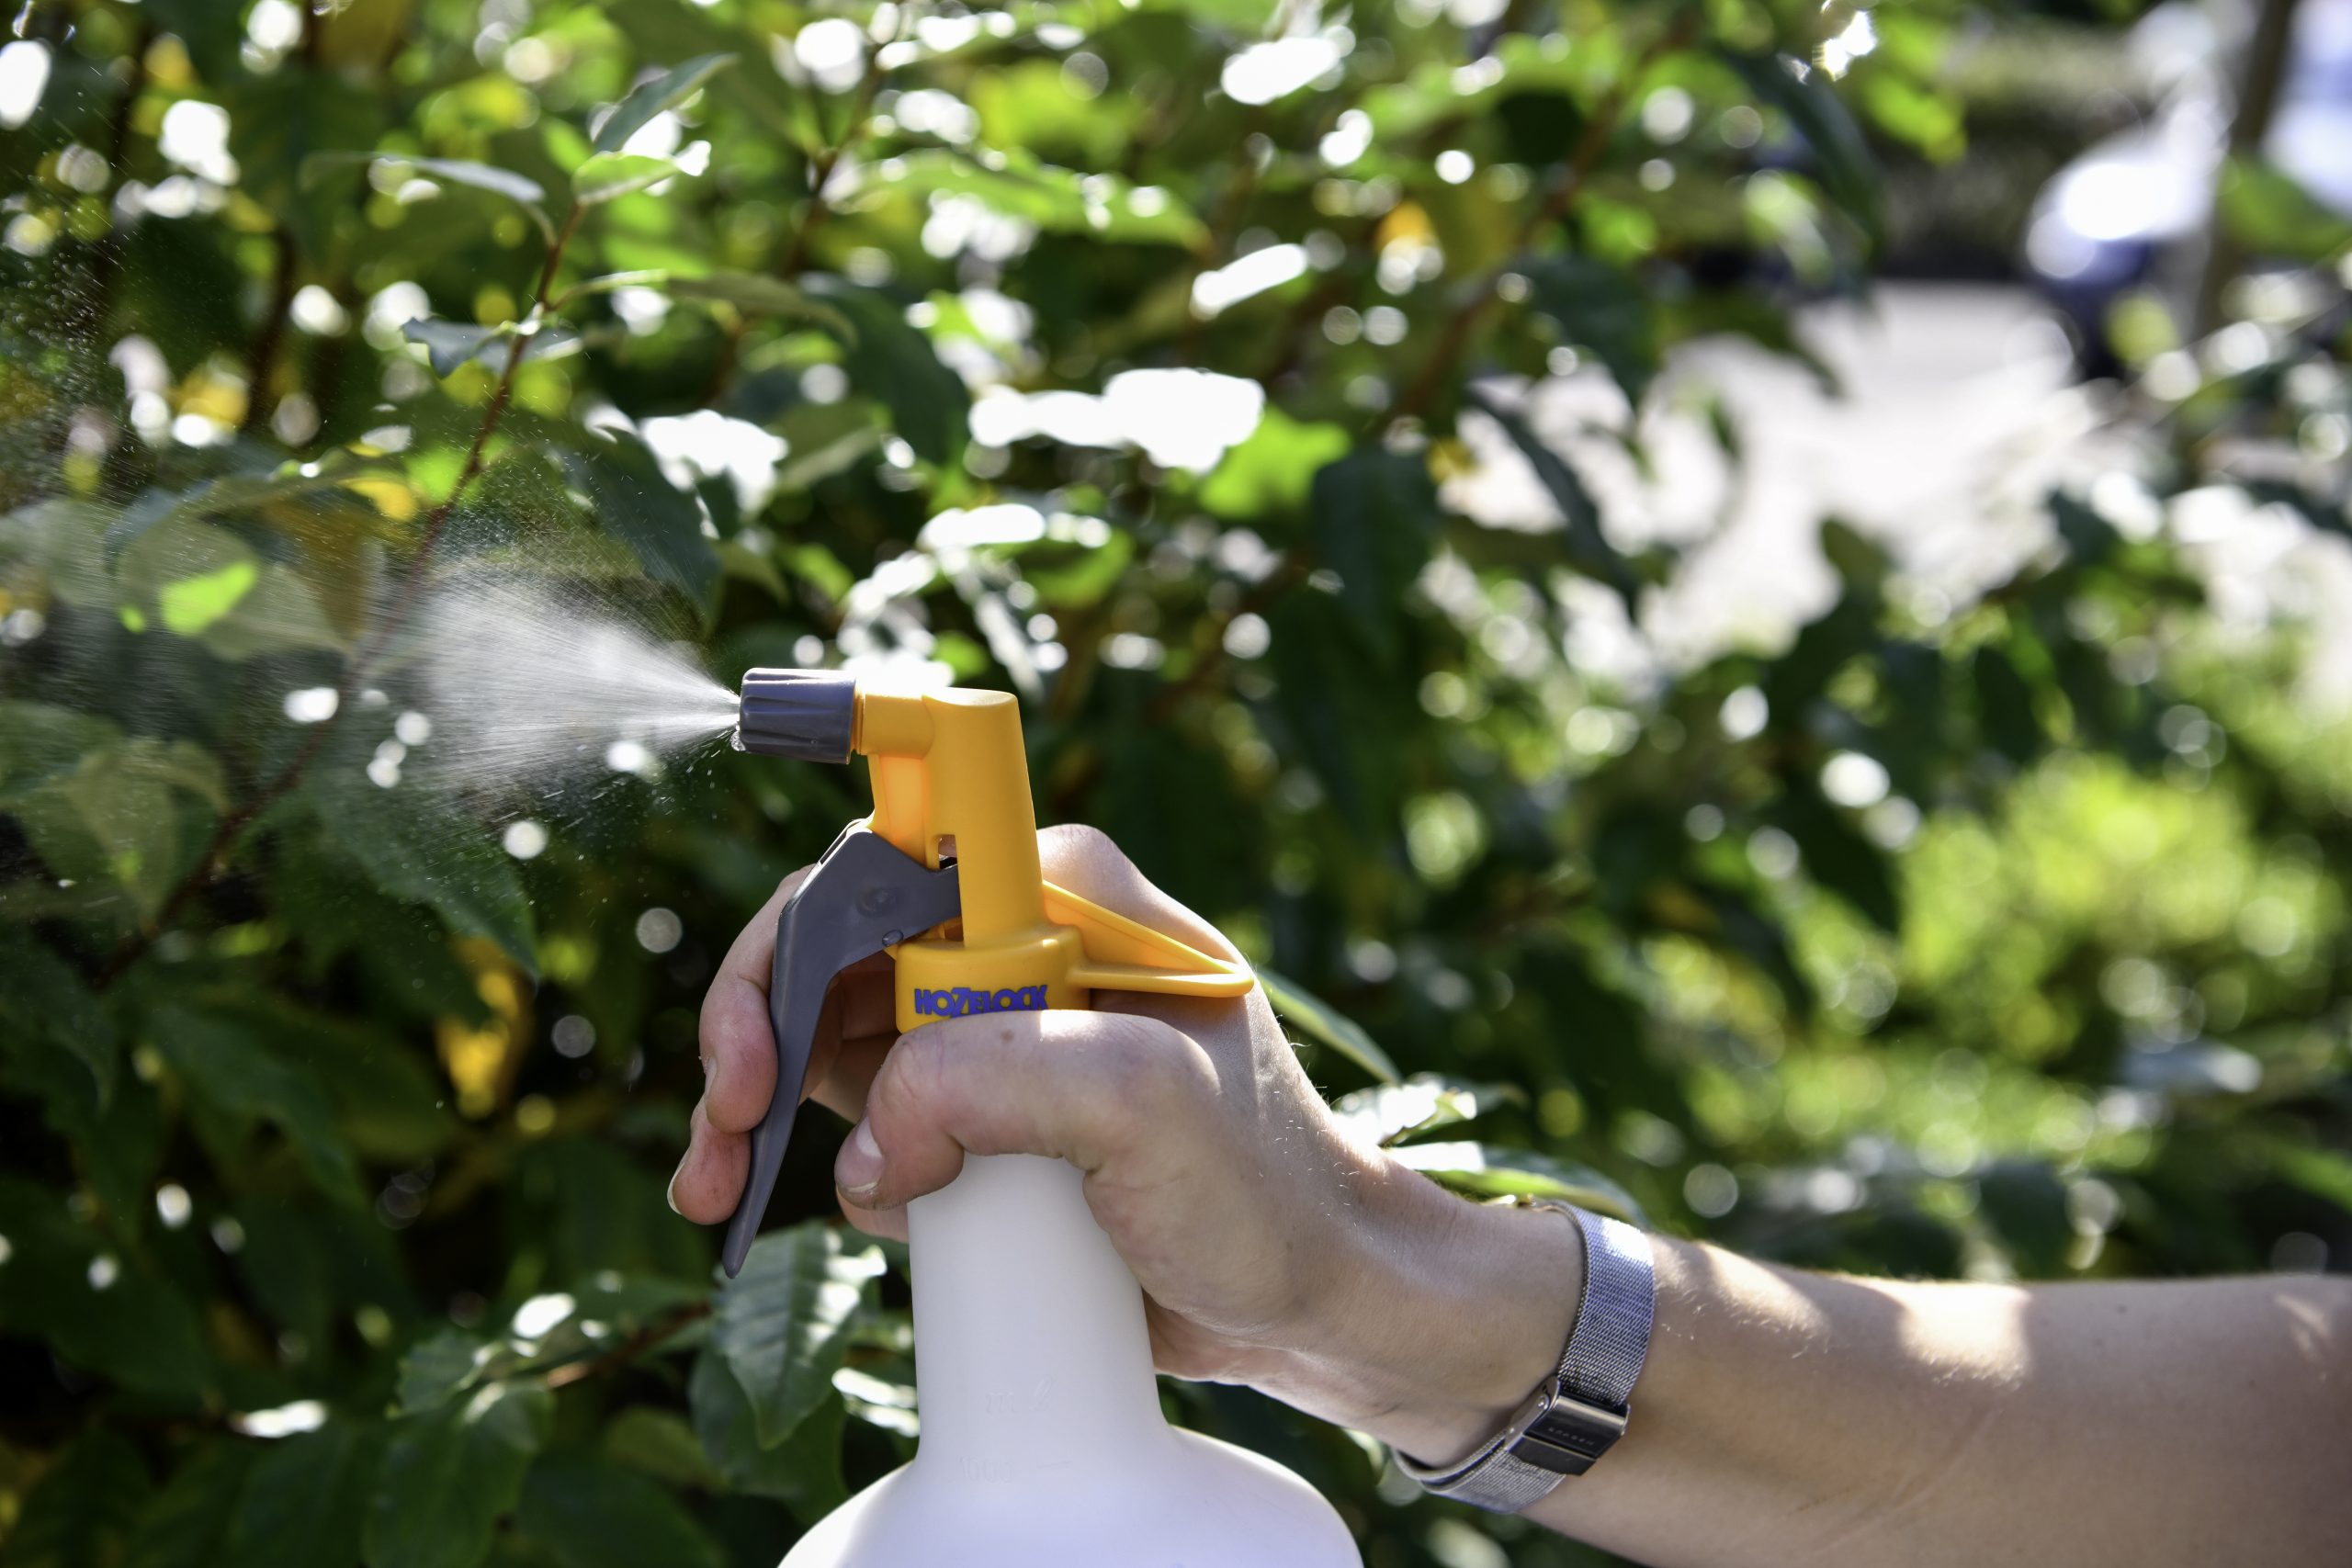 Hozelock Trigger Spraymist Sprayer 0.5 L Dampen Clothes Ironing Spraying Plants 